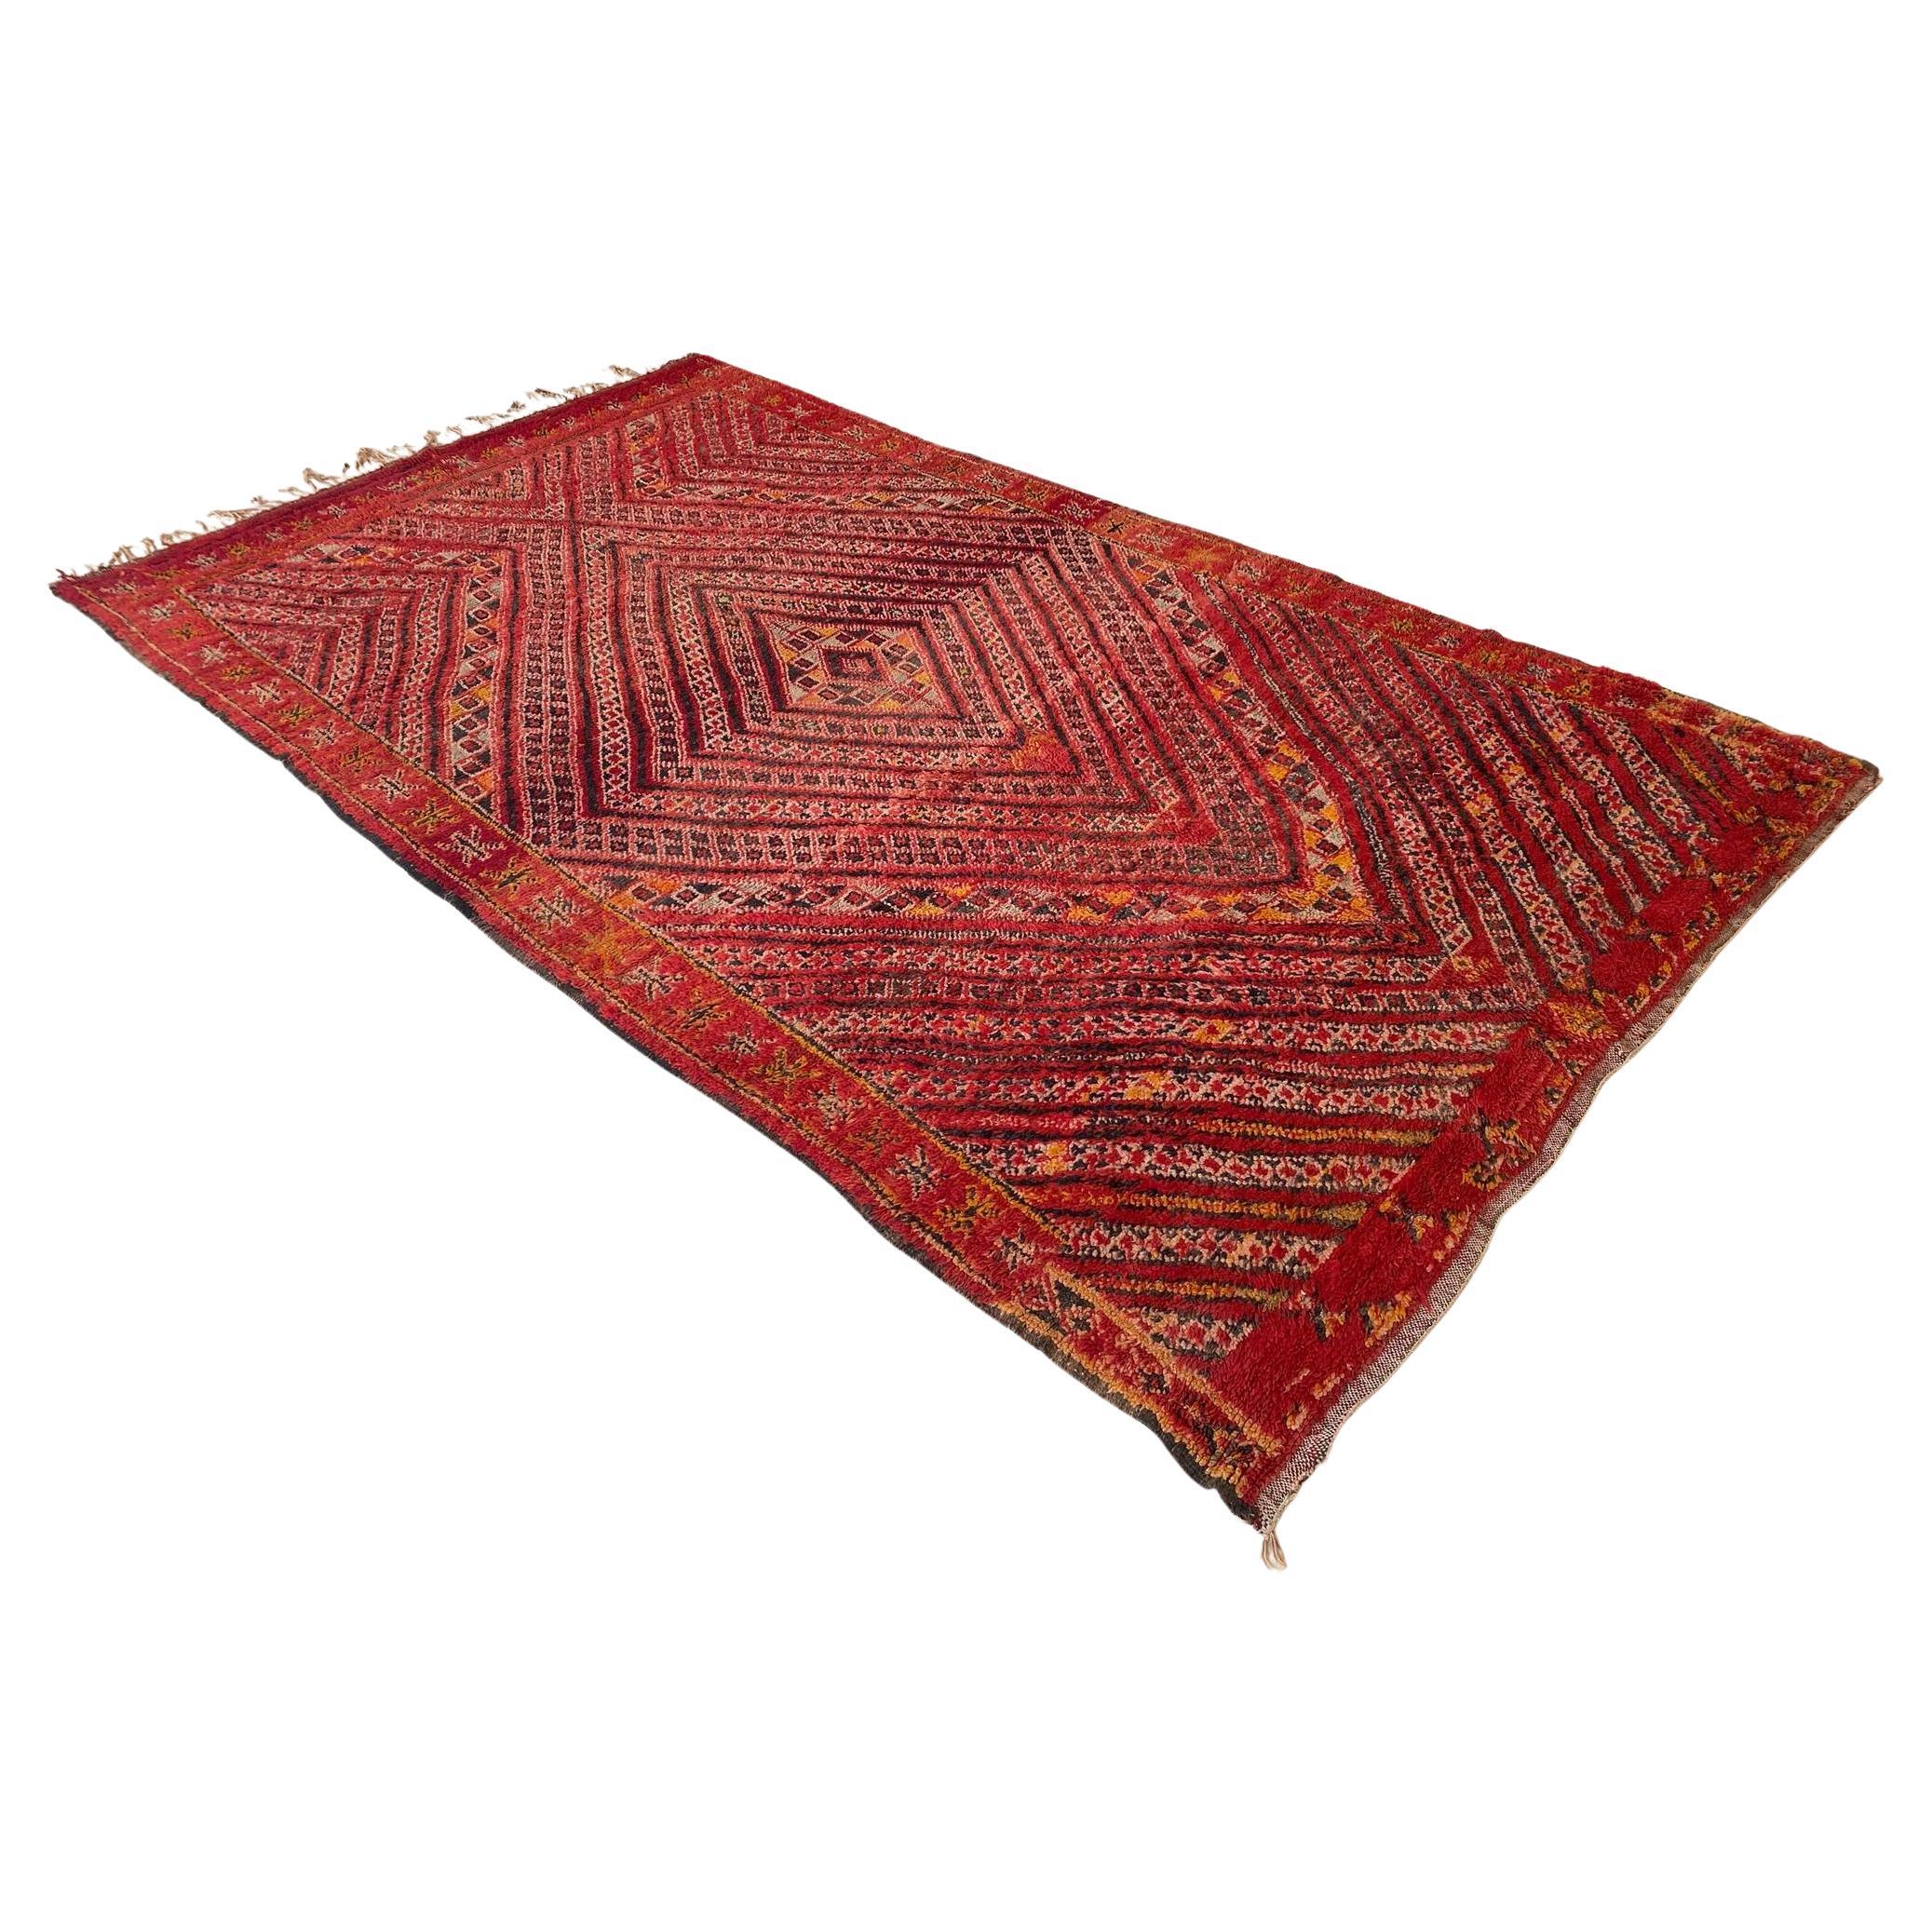 Vintage Moroccan Zayane rug - Red - 6.7x11.3feet / 205x344cm